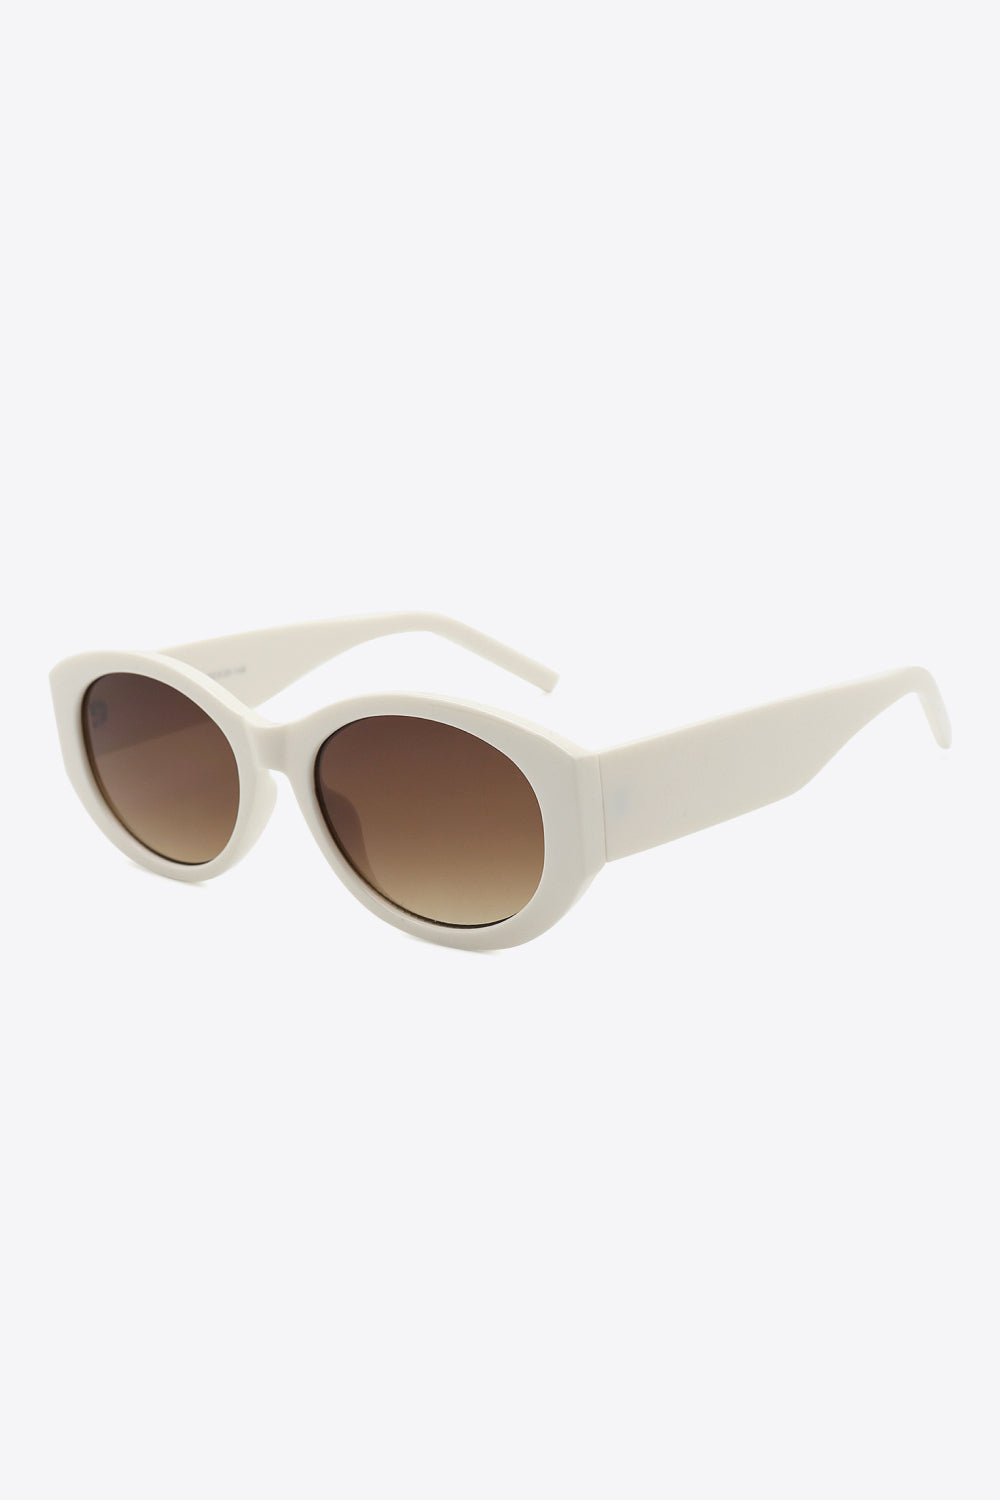 UV400 Polycarbonate Sunglasses - Sunglasses - FITGGINS